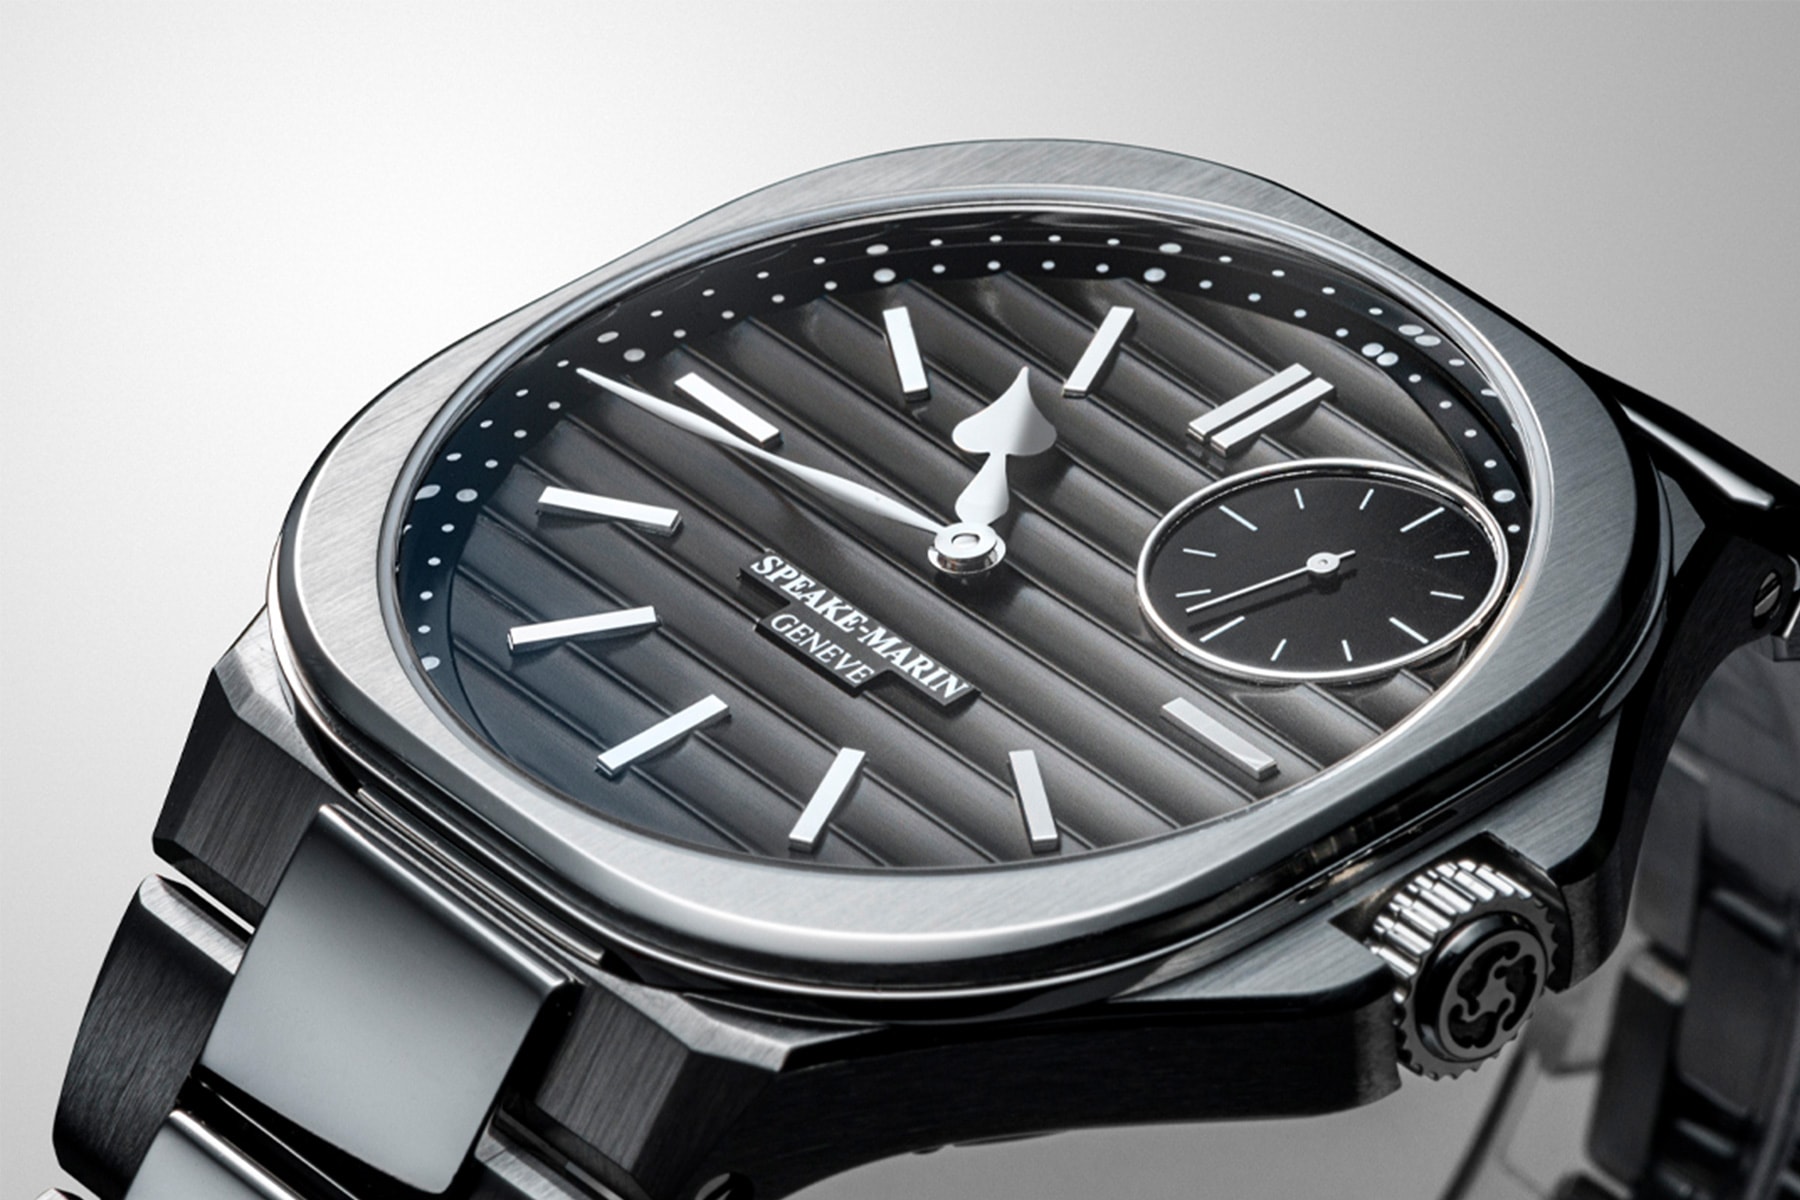 speake marin ripples watch release info Big Ben Accessories luxury watches automatic geneve 